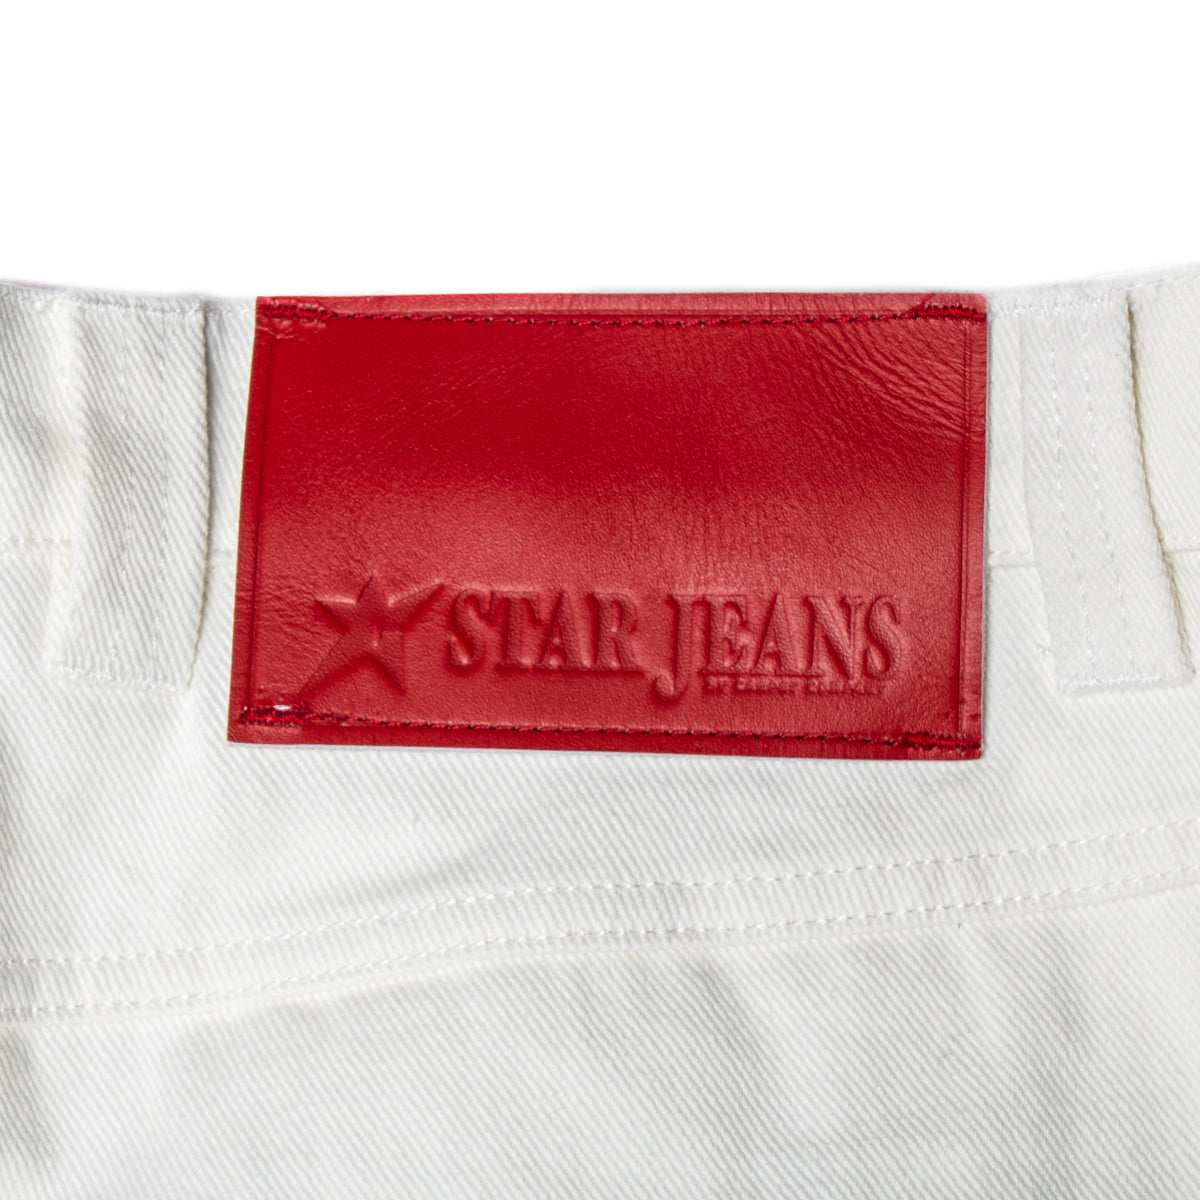 Carpet Company | C-Star Jeans Color : White Baggy Fit 